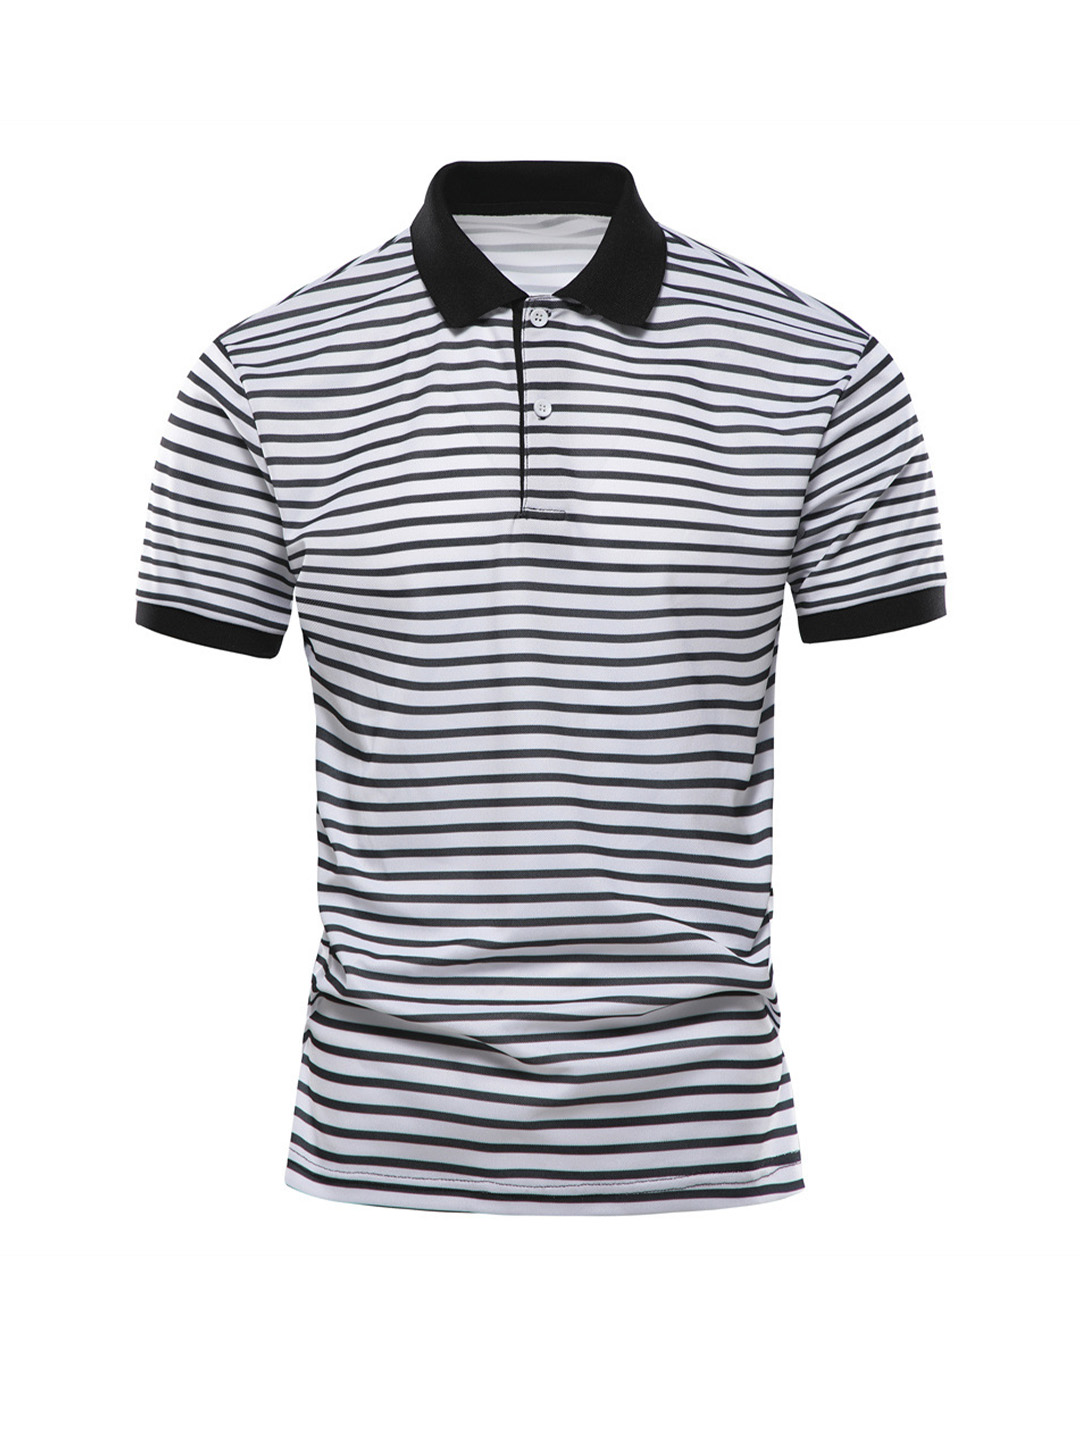 Men's Joseph White Striped T-shirt-poisonstreetwear.com